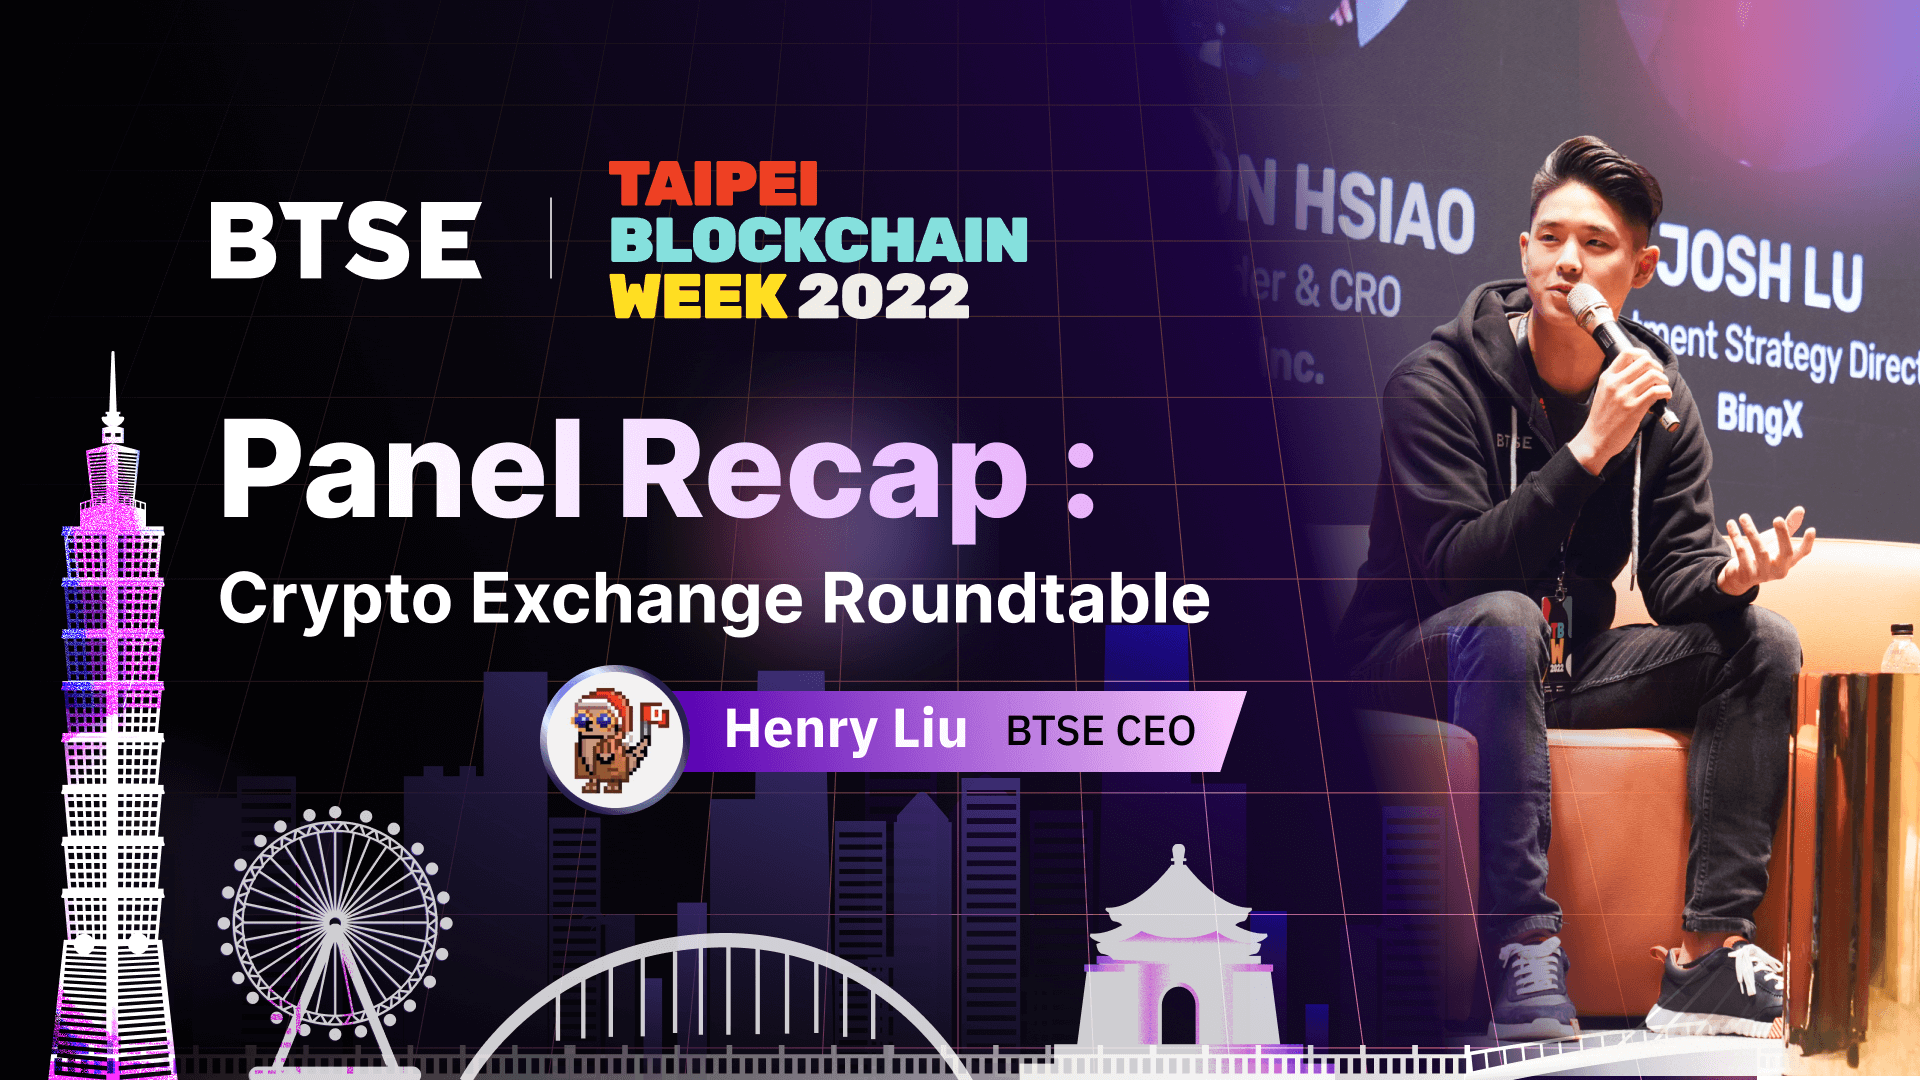 BTSE CEO Henry Liu Shares Industry Outlook at Taipei Blockchain Week 2022